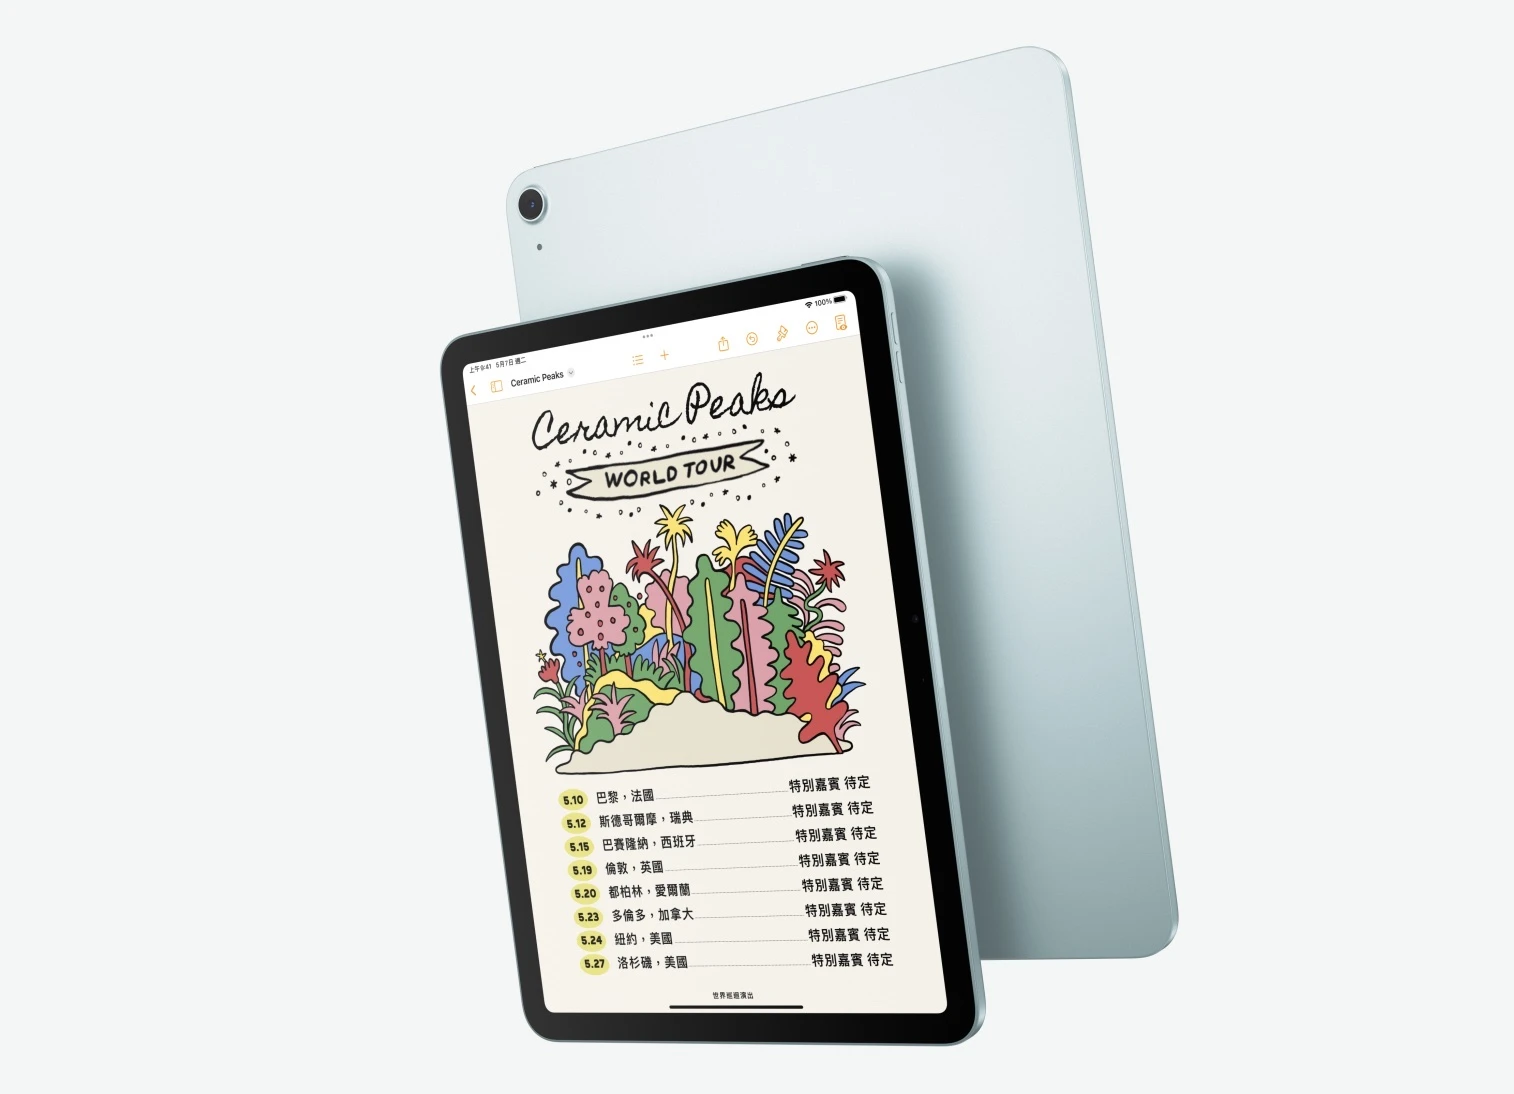 2024 iPad Pro 顏色 外型 規格 尺寸 價格 開賣日期 上市日期 懶人包 總整理